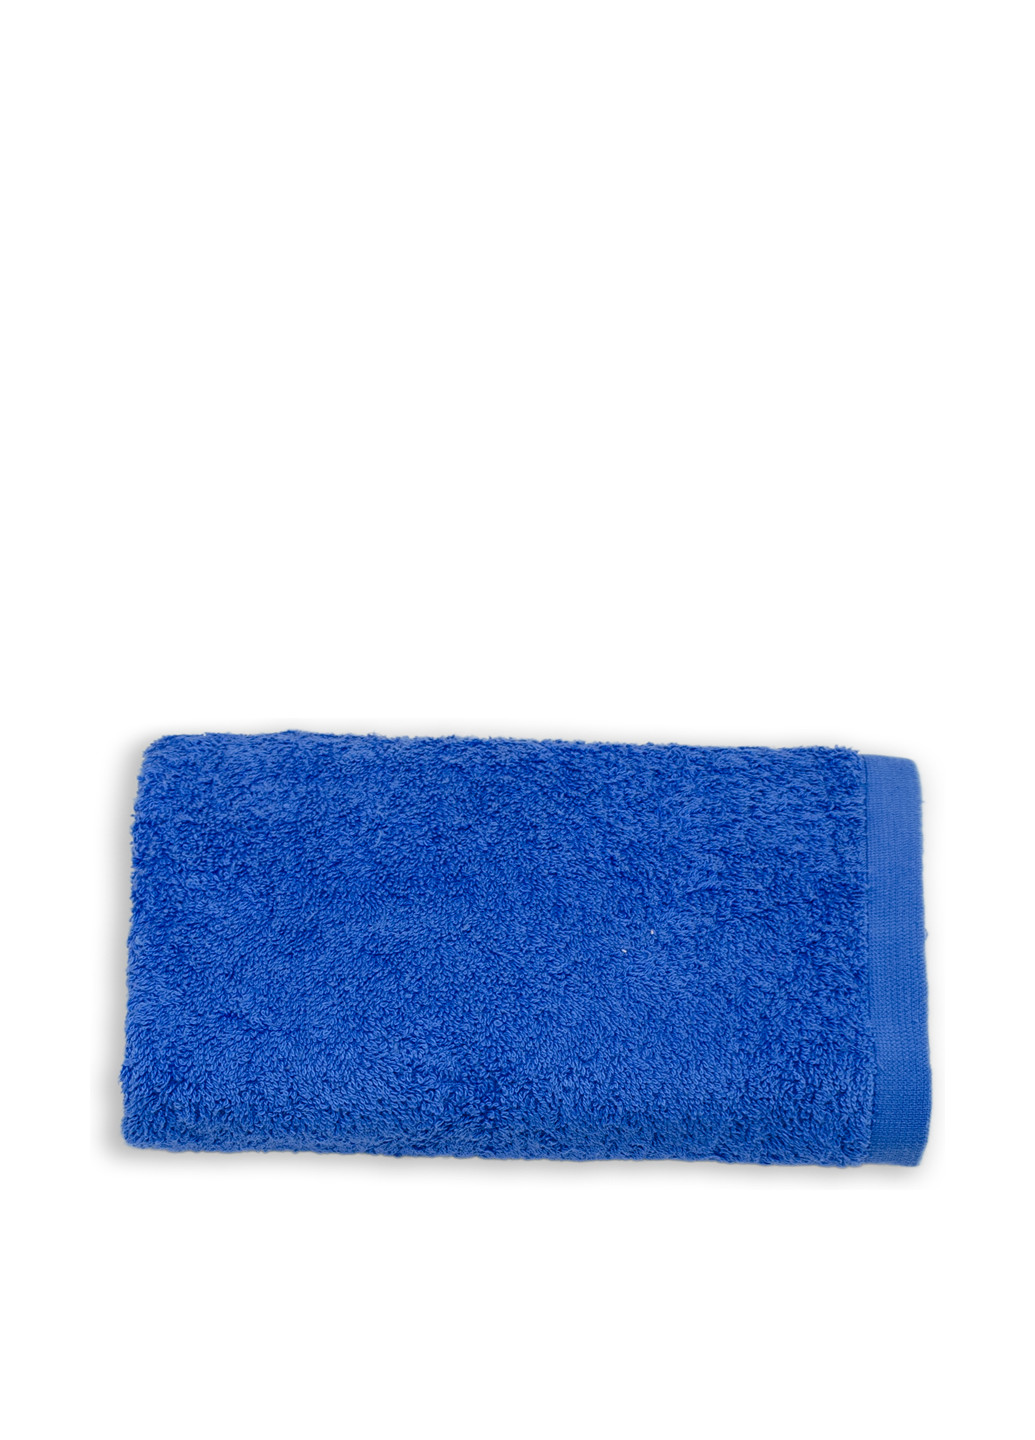 No Brand полотенце, 50х90 см однотонный синий производство - Туркменистан